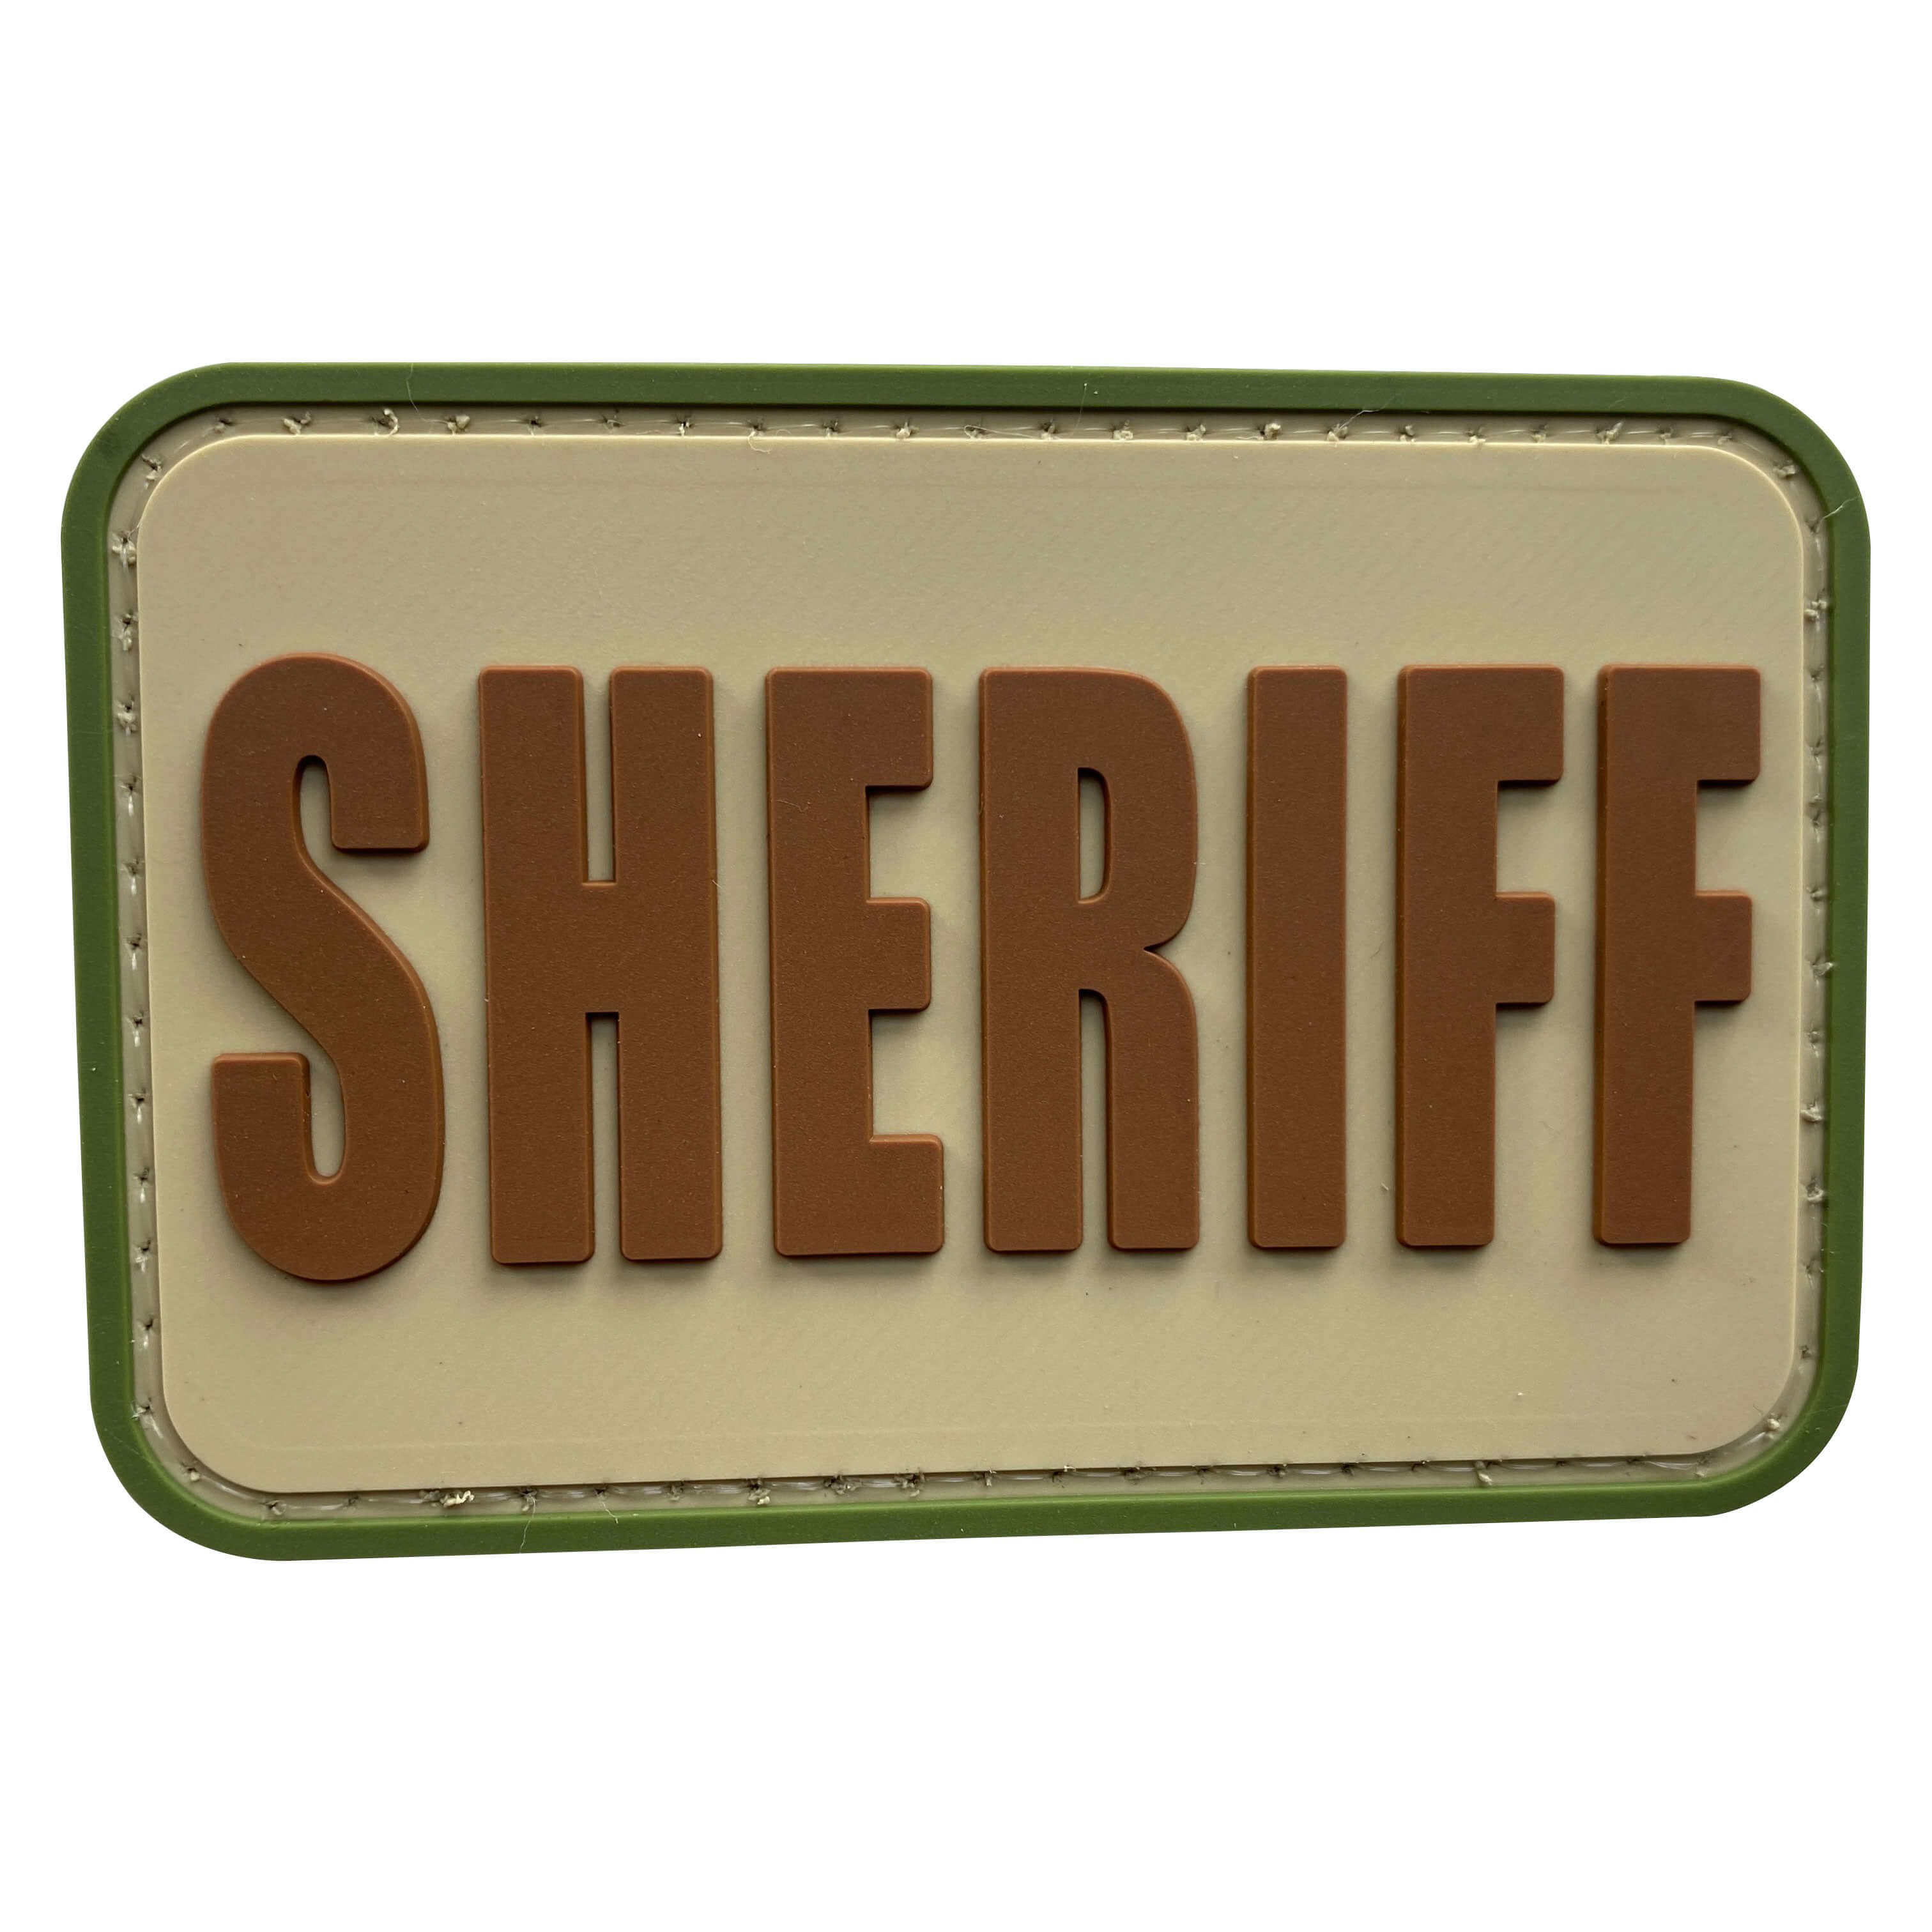 uuKen 3x2 inches Small PVC Rubber County Deputy Sheriff Department Dep